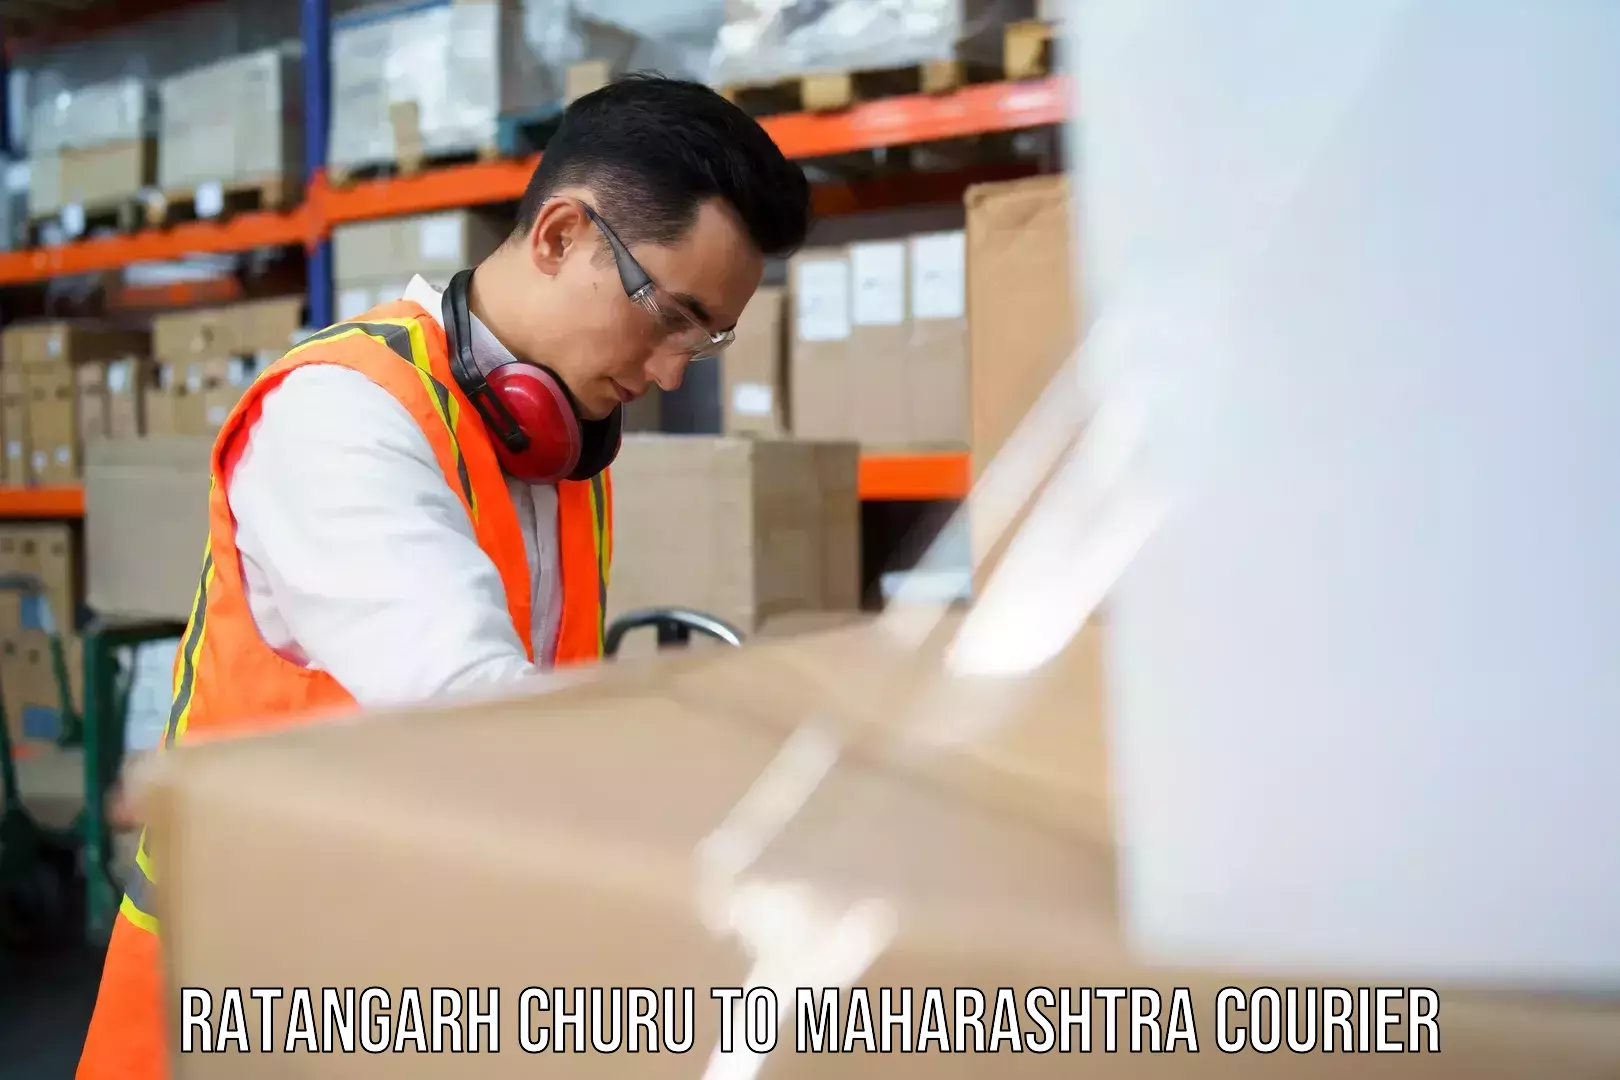 Quick dispatch service Ratangarh Churu to Maharashtra